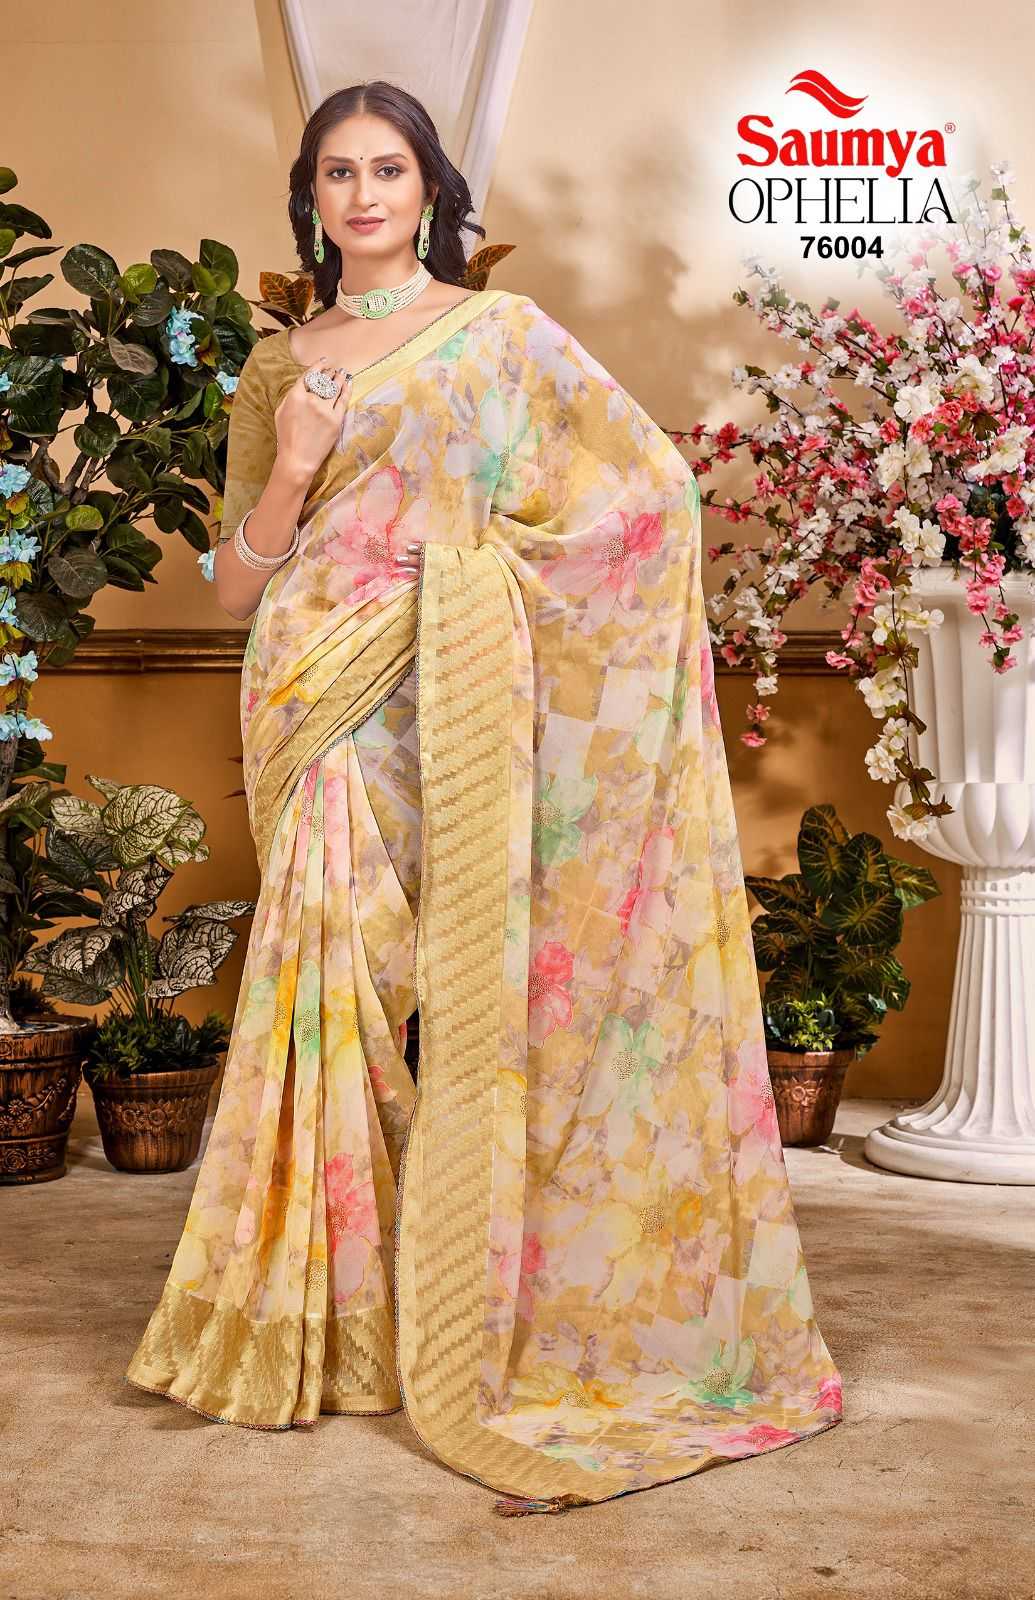 saumya ophelia fancy georgette single colour matching sarees catalog